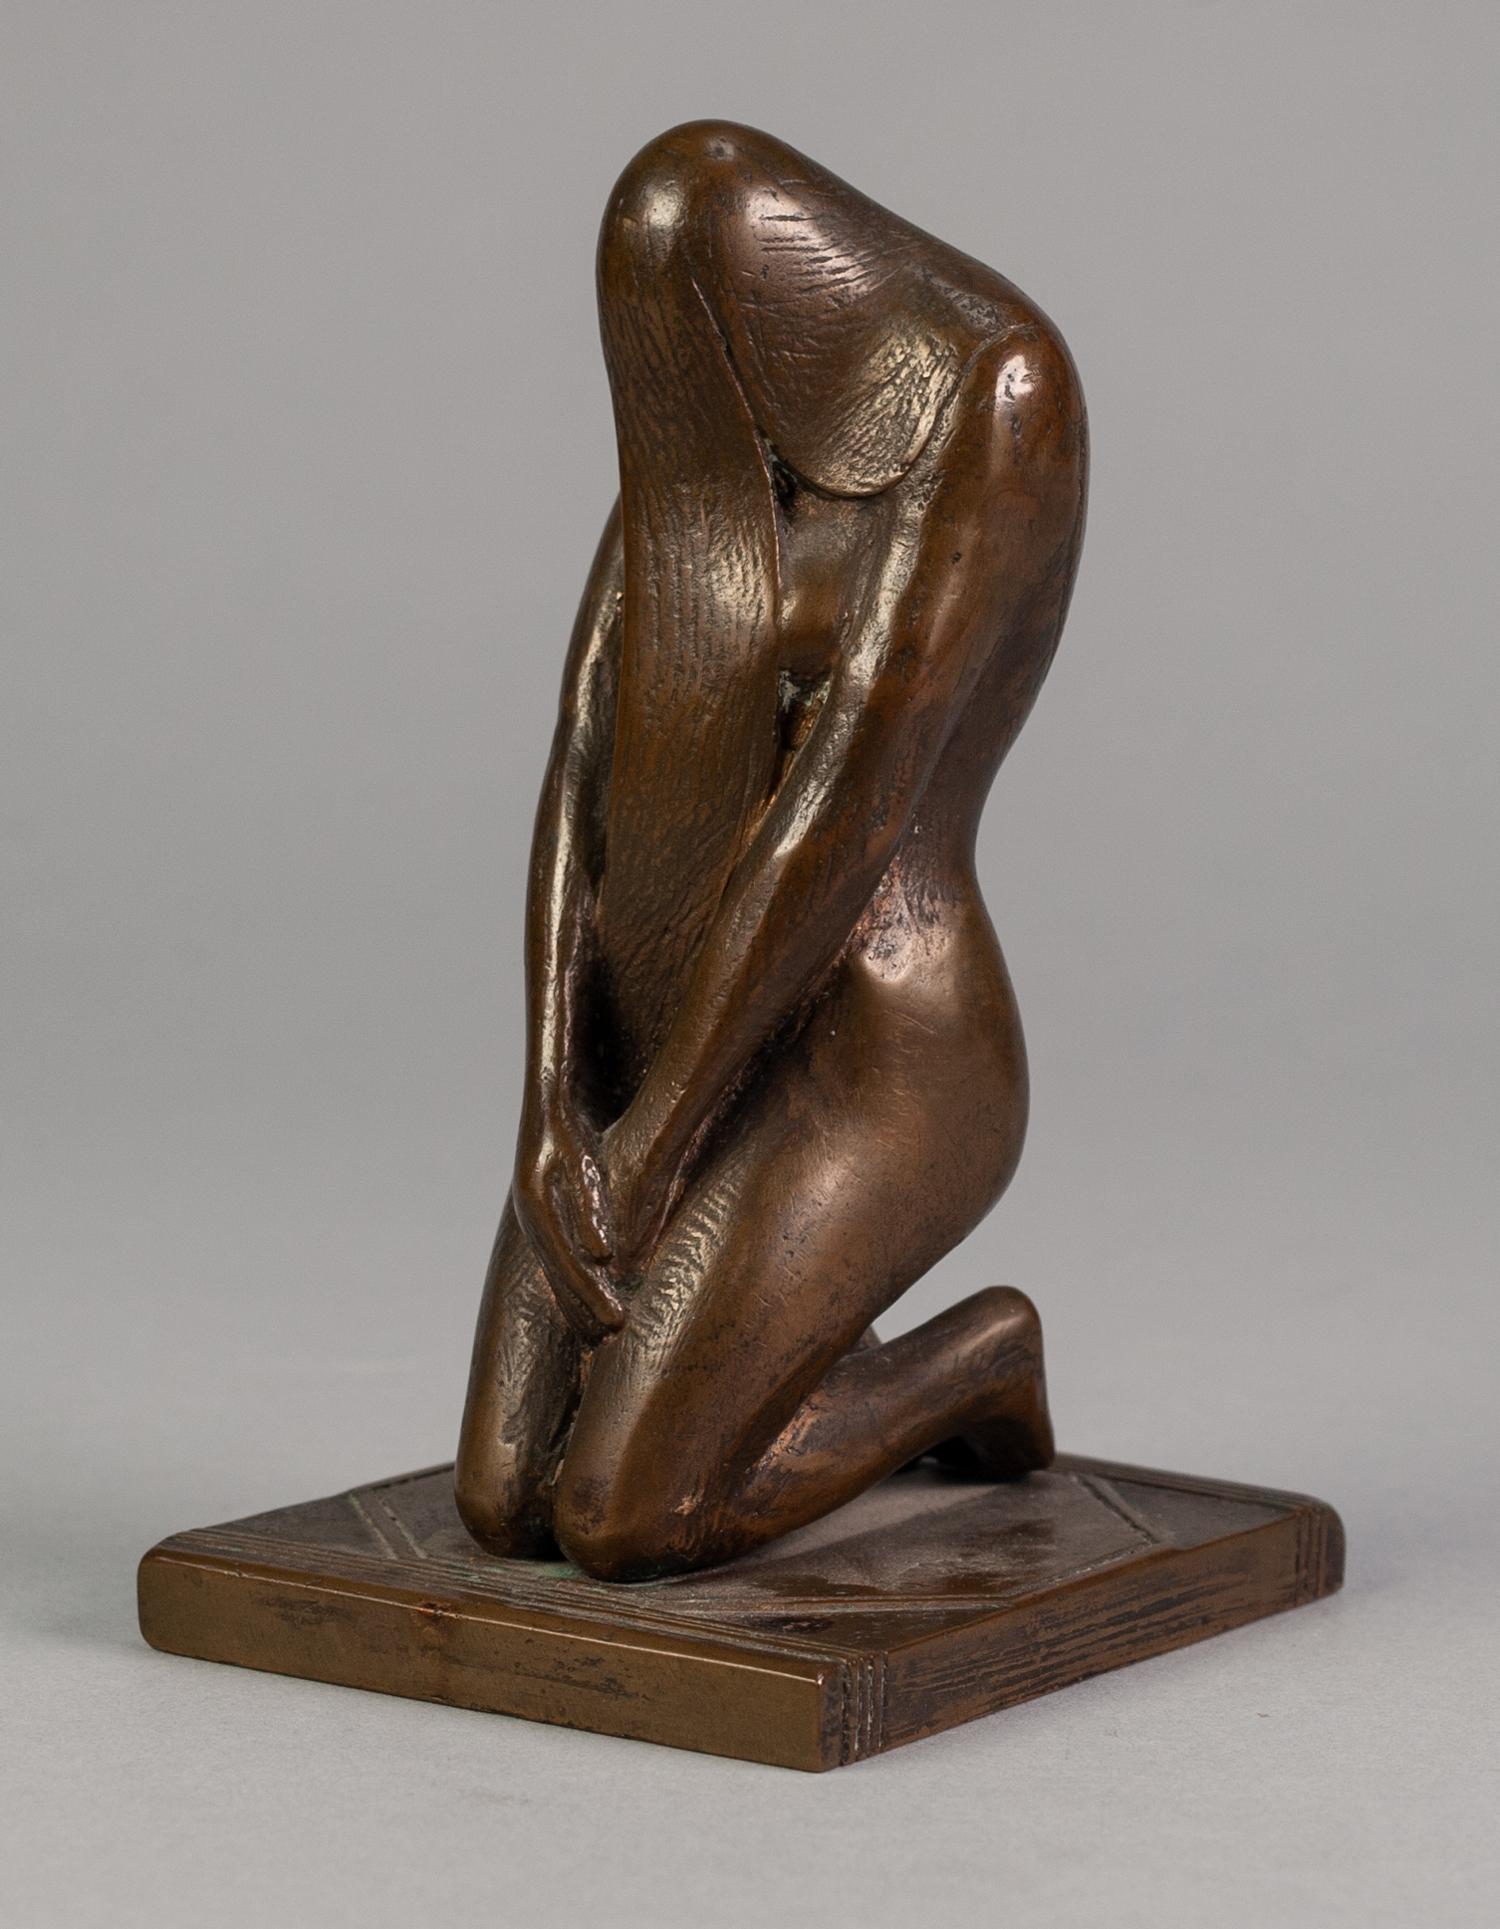 MALCOLM WOODWARD (b.1943) ARTIST SIGNED LIMITED EDITION BRONZE FIGURE Kneeling naked female figure